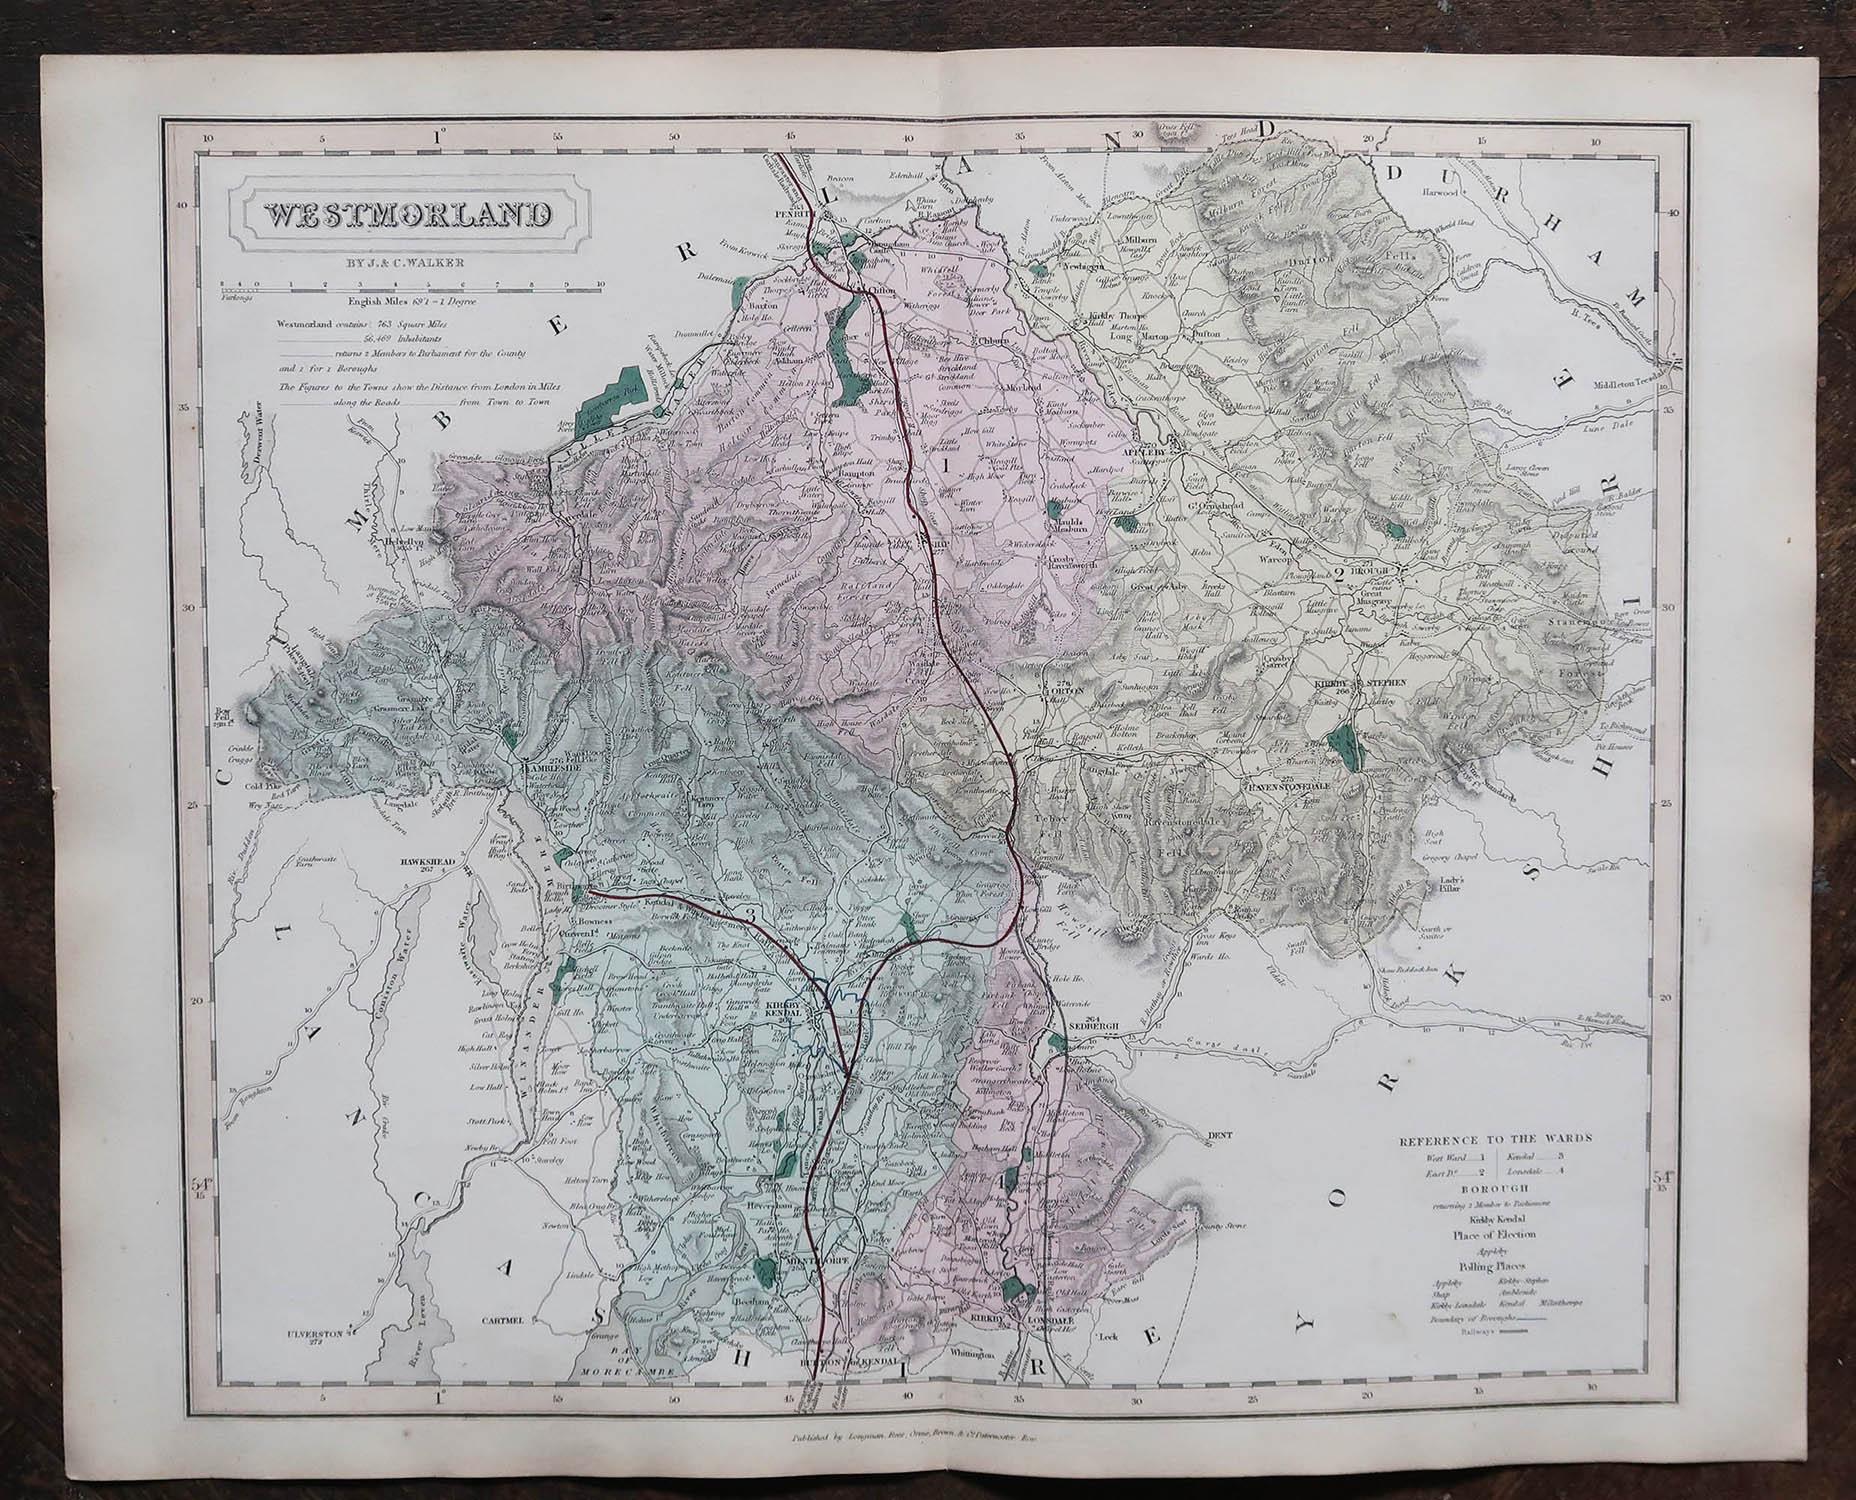 Other Original Antique English County Map, Cumbria, J & C Walker, 1851